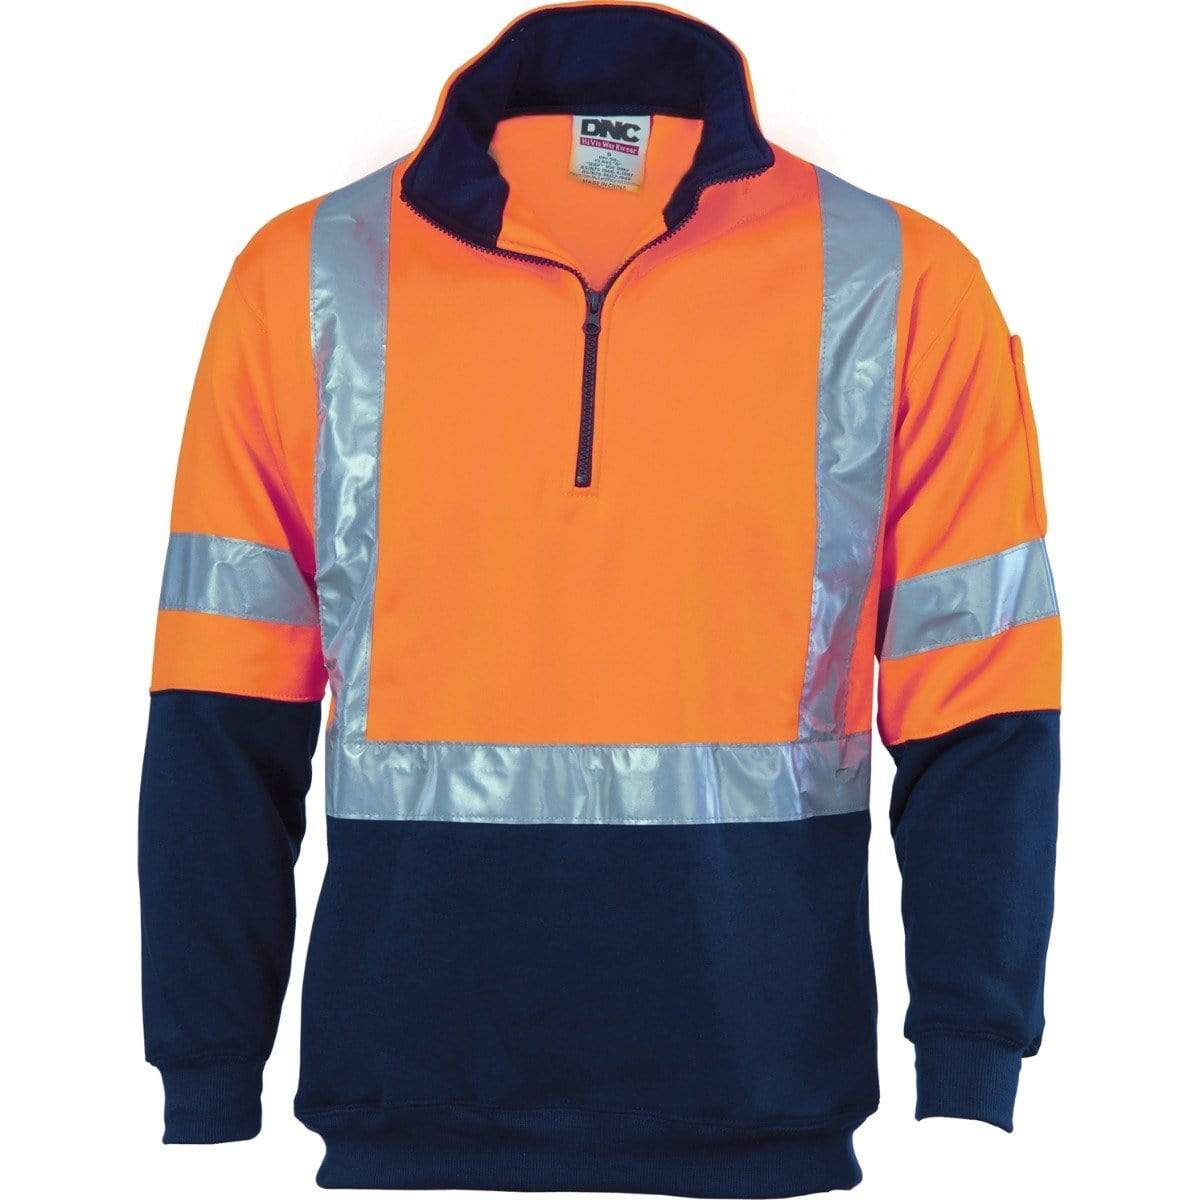 Dnc Workwear Hi-vis Cross Back D/n Two Tone 1/2 Zip Fleecy Sweatshirt - 3929 Work Wear DNC Workwear Orange/Navy S 